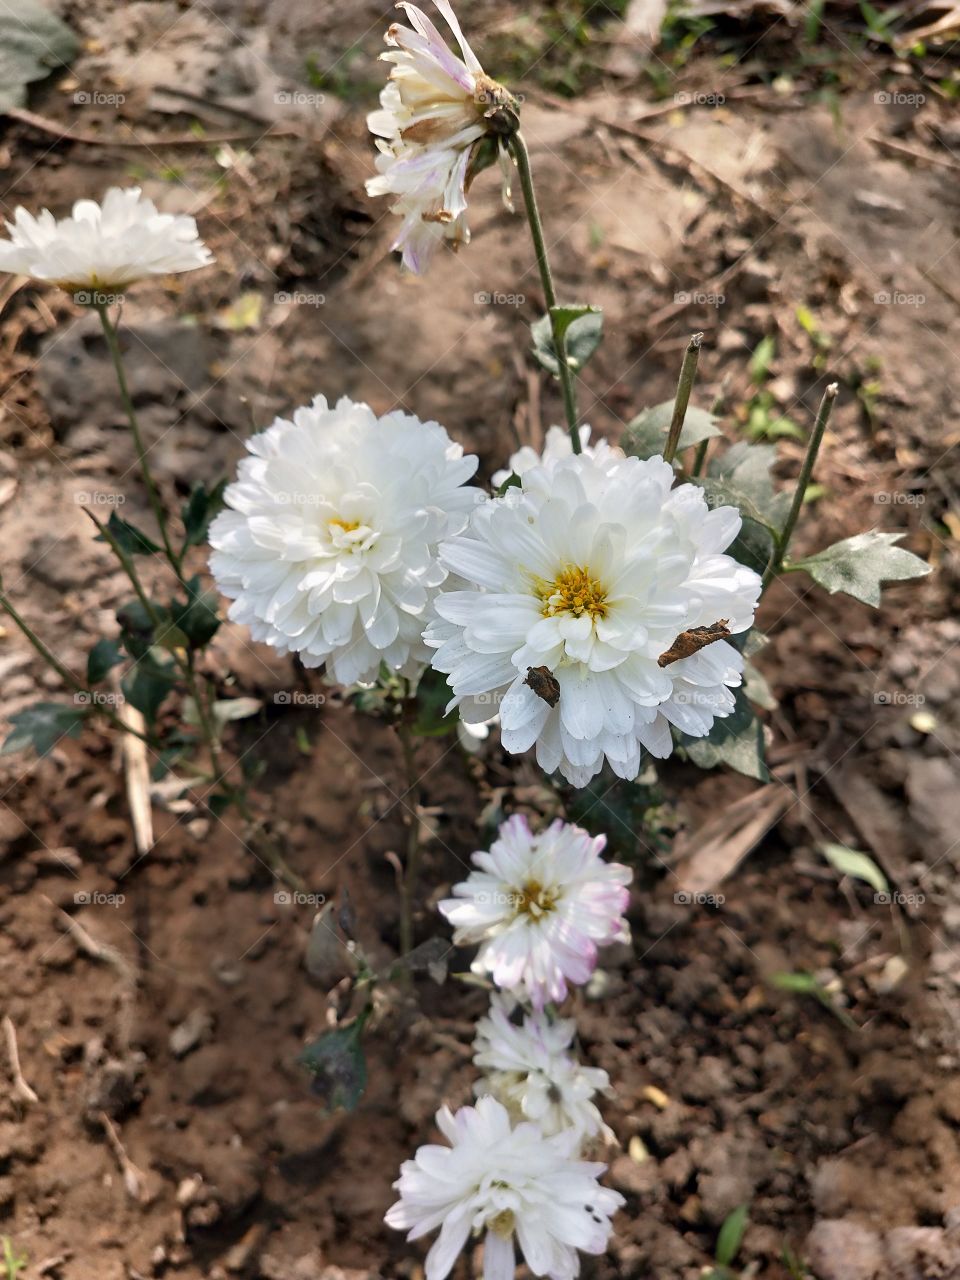 White flower symbolizes peace